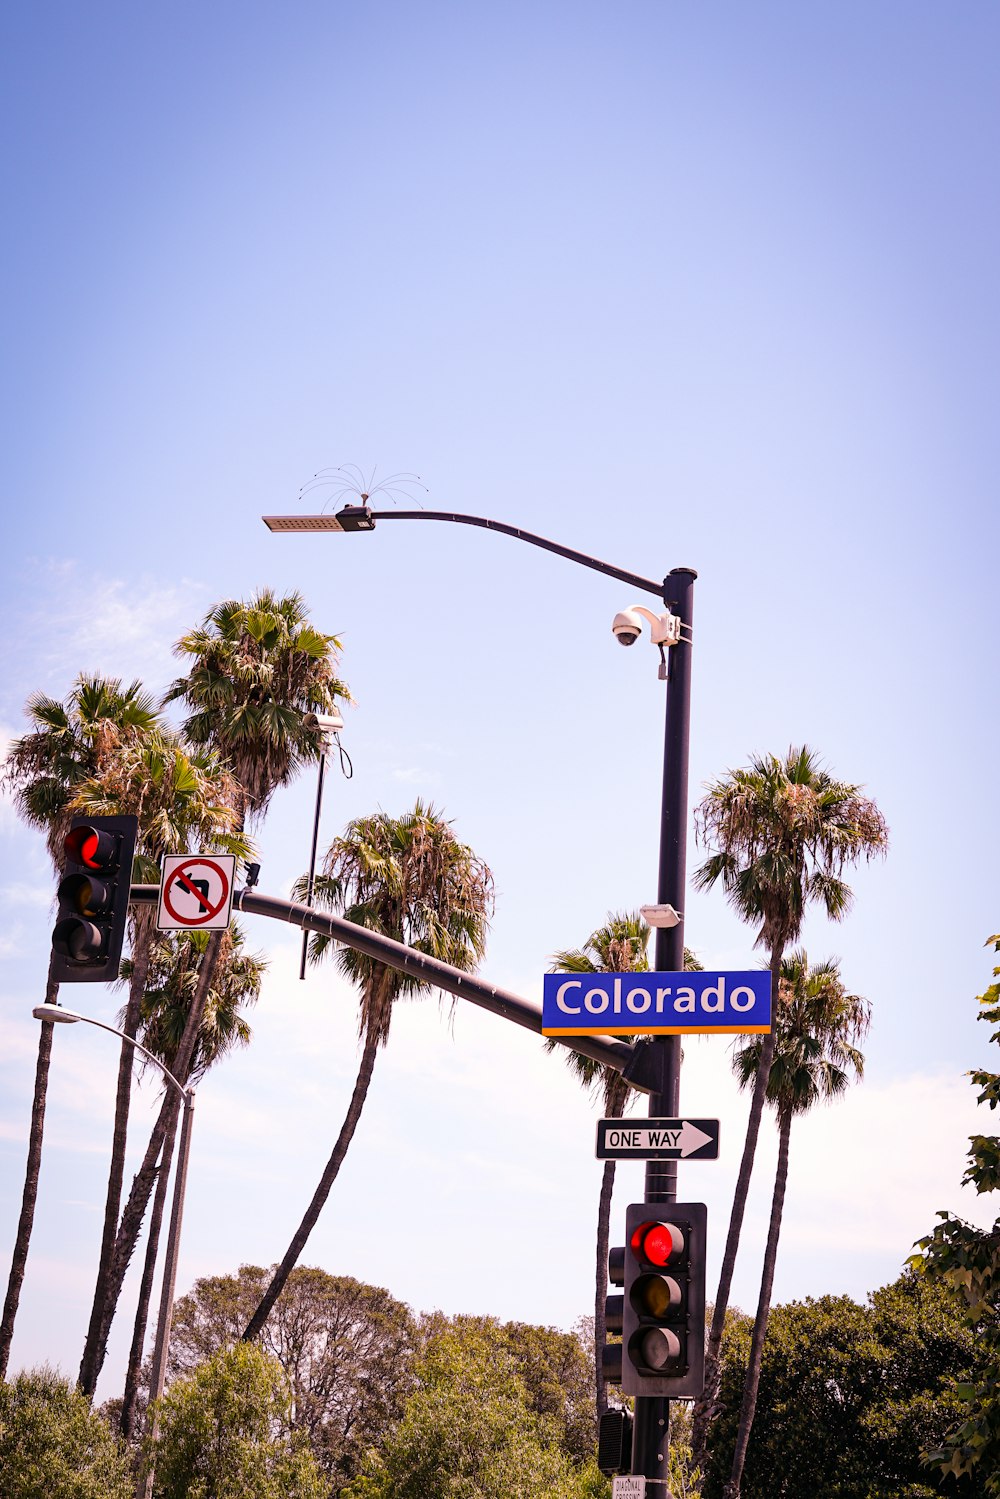 blue Colorado signboard under traffic light